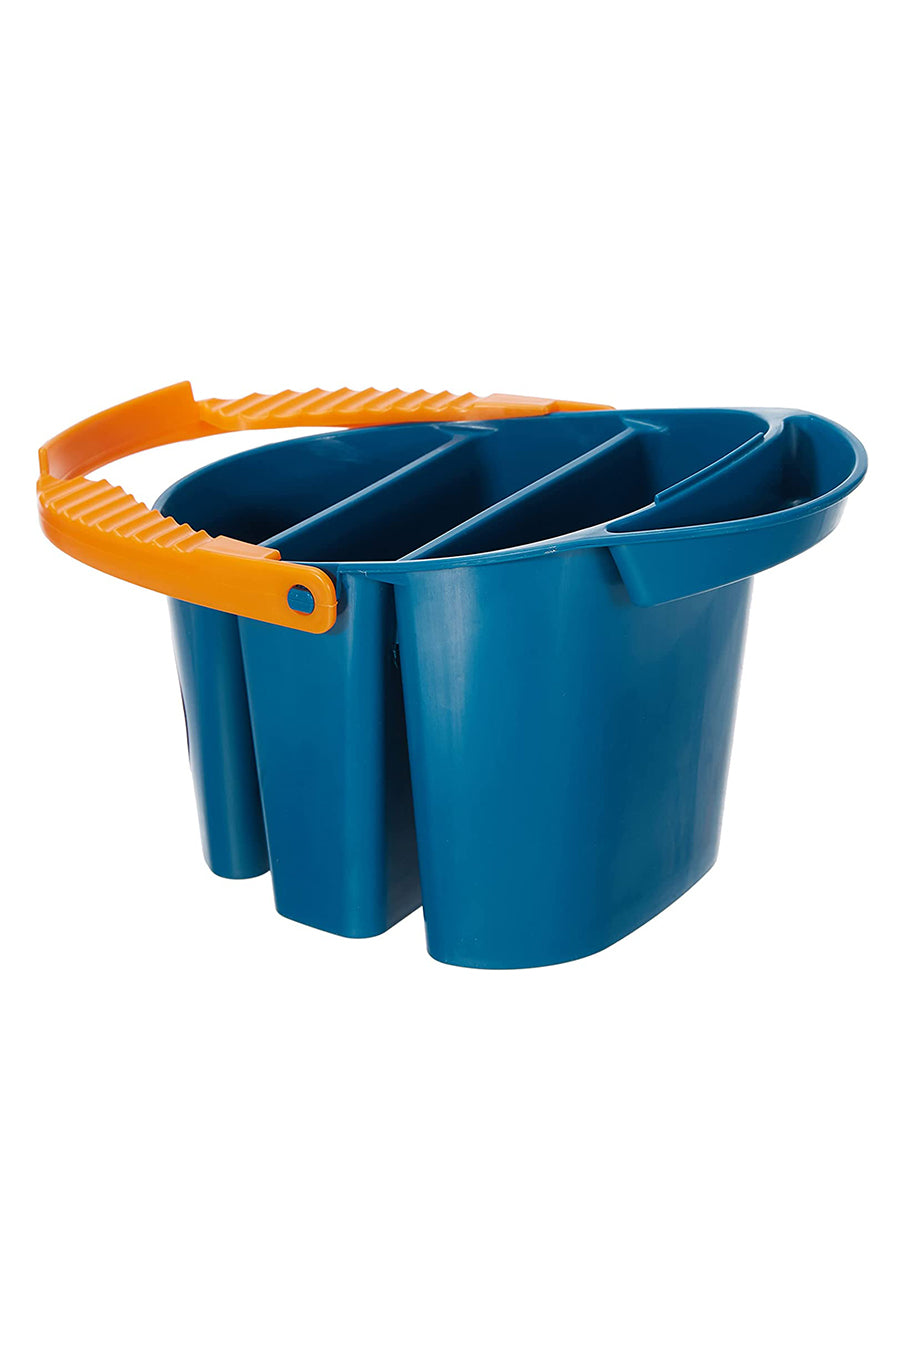 Mijello® Water Bucket Small